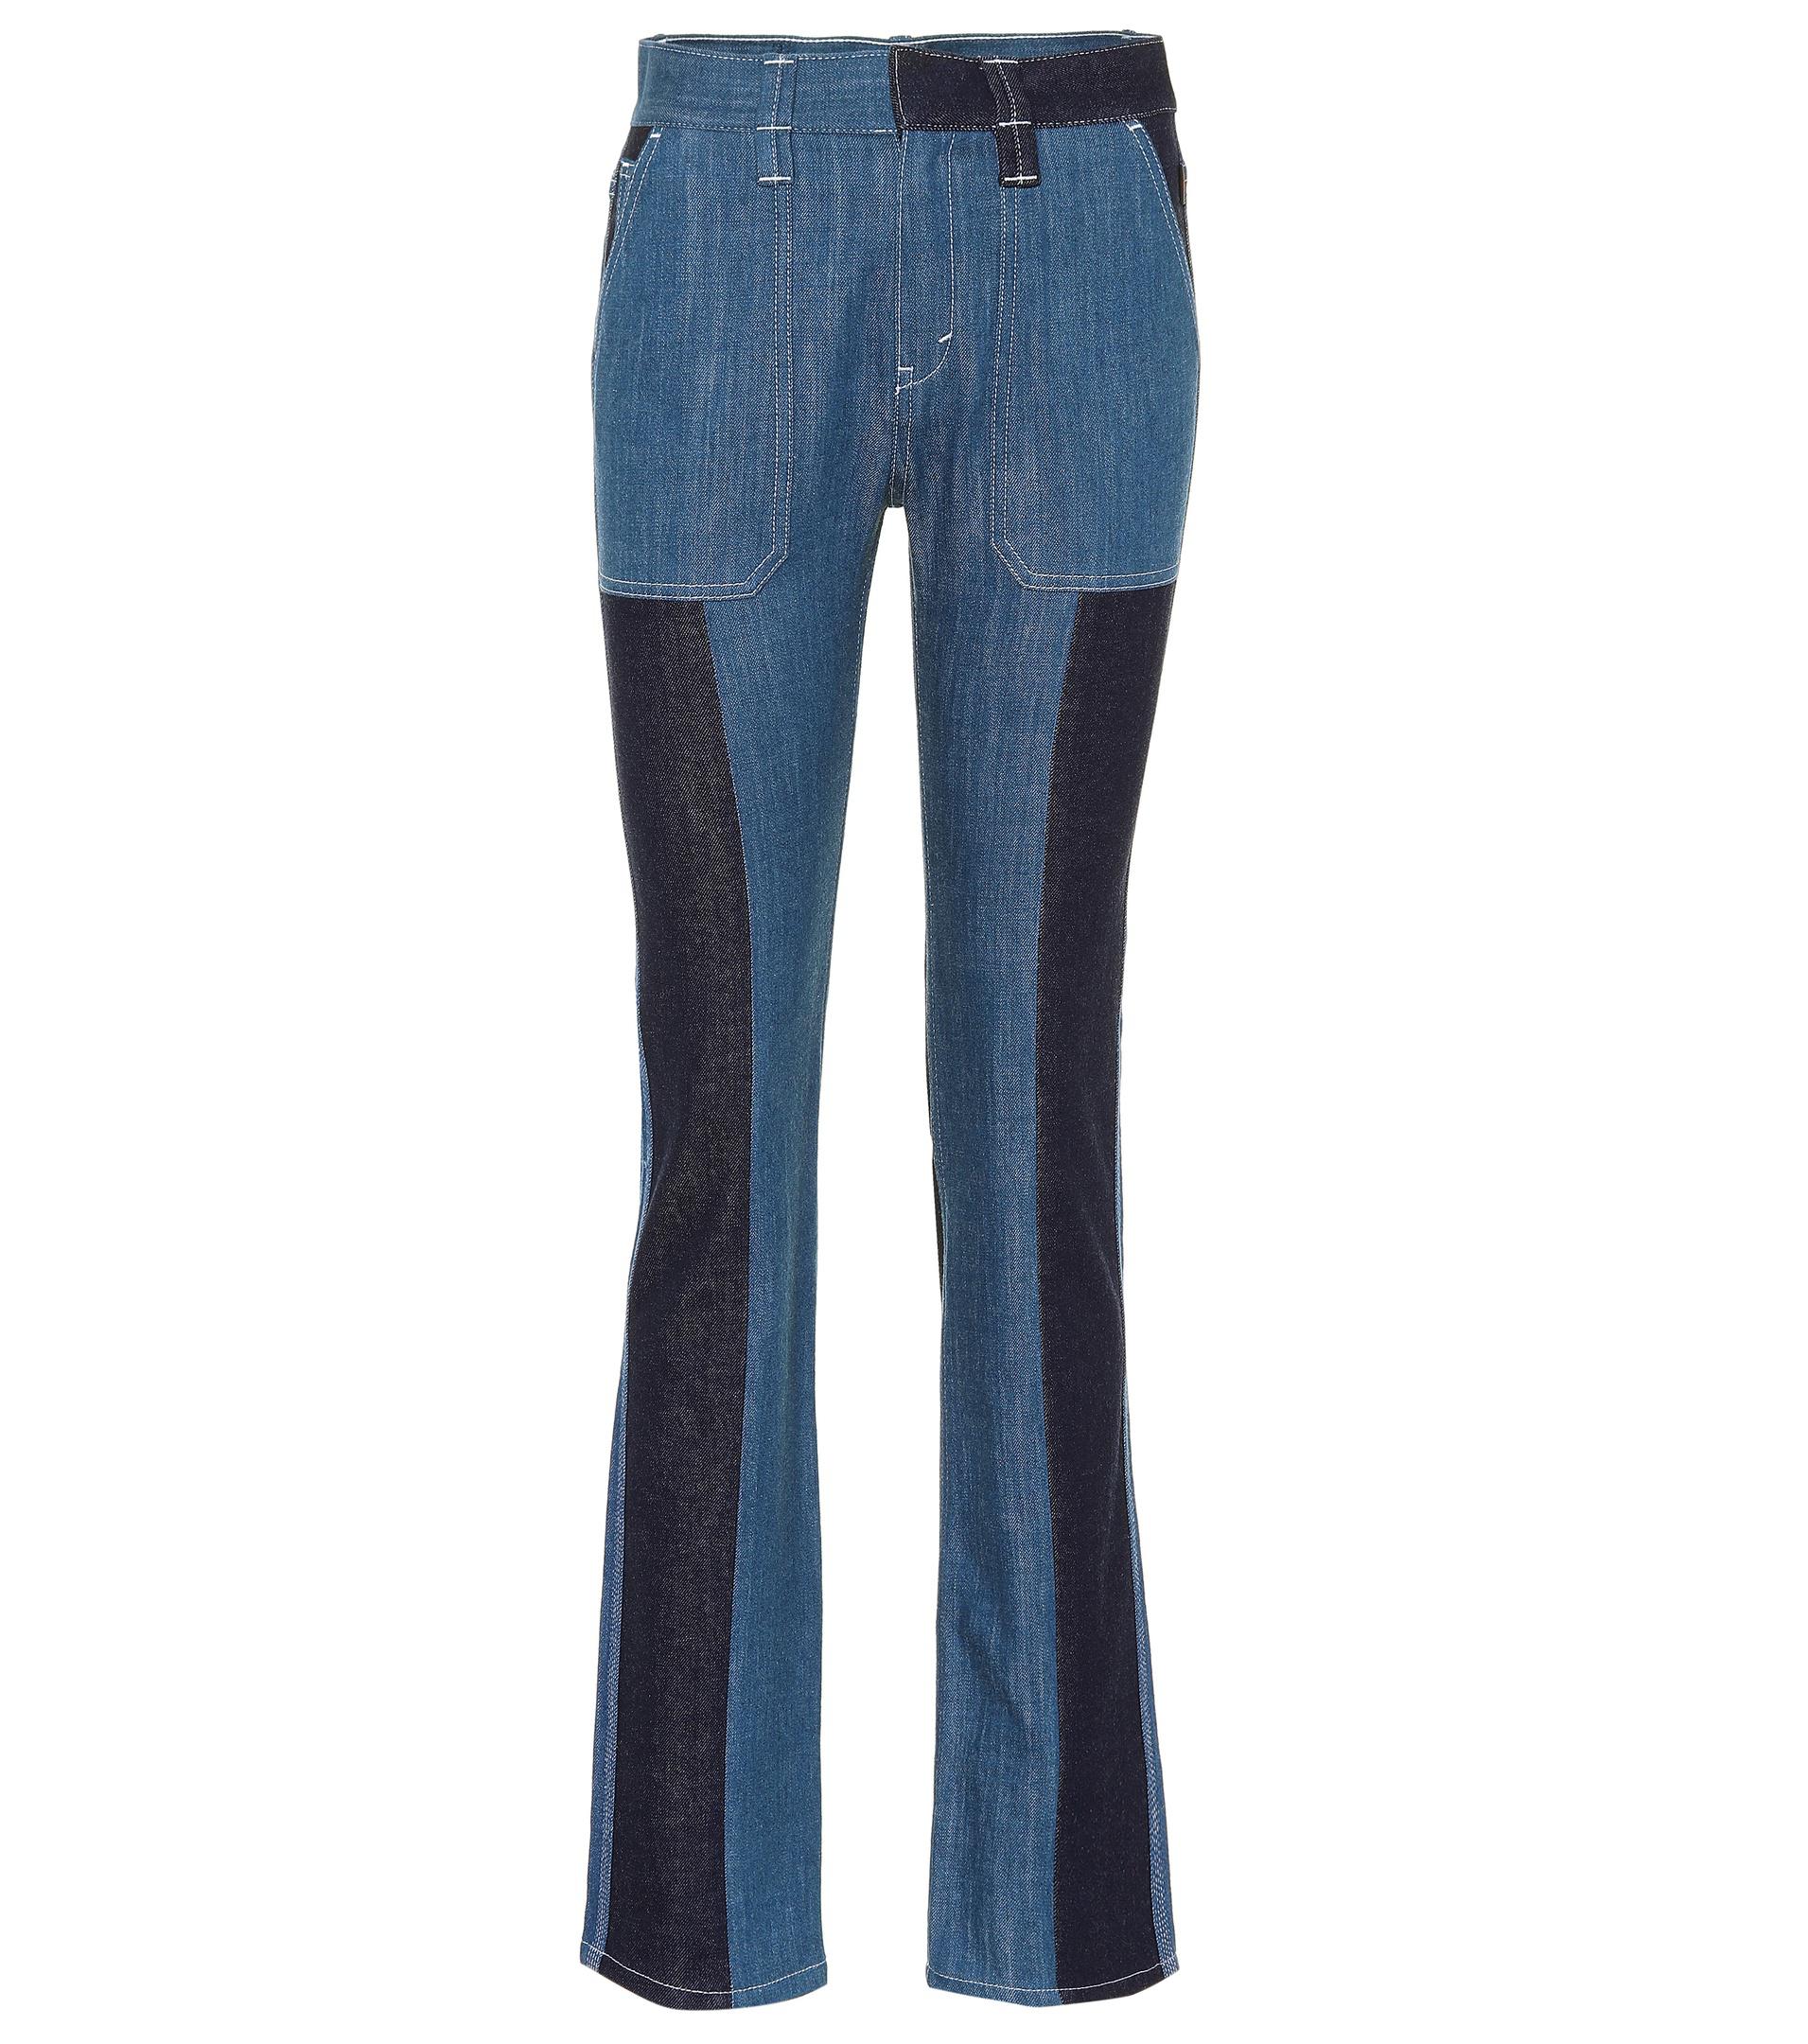 Chloé Denim Patchwork Flared Jeans in Blue - Lyst